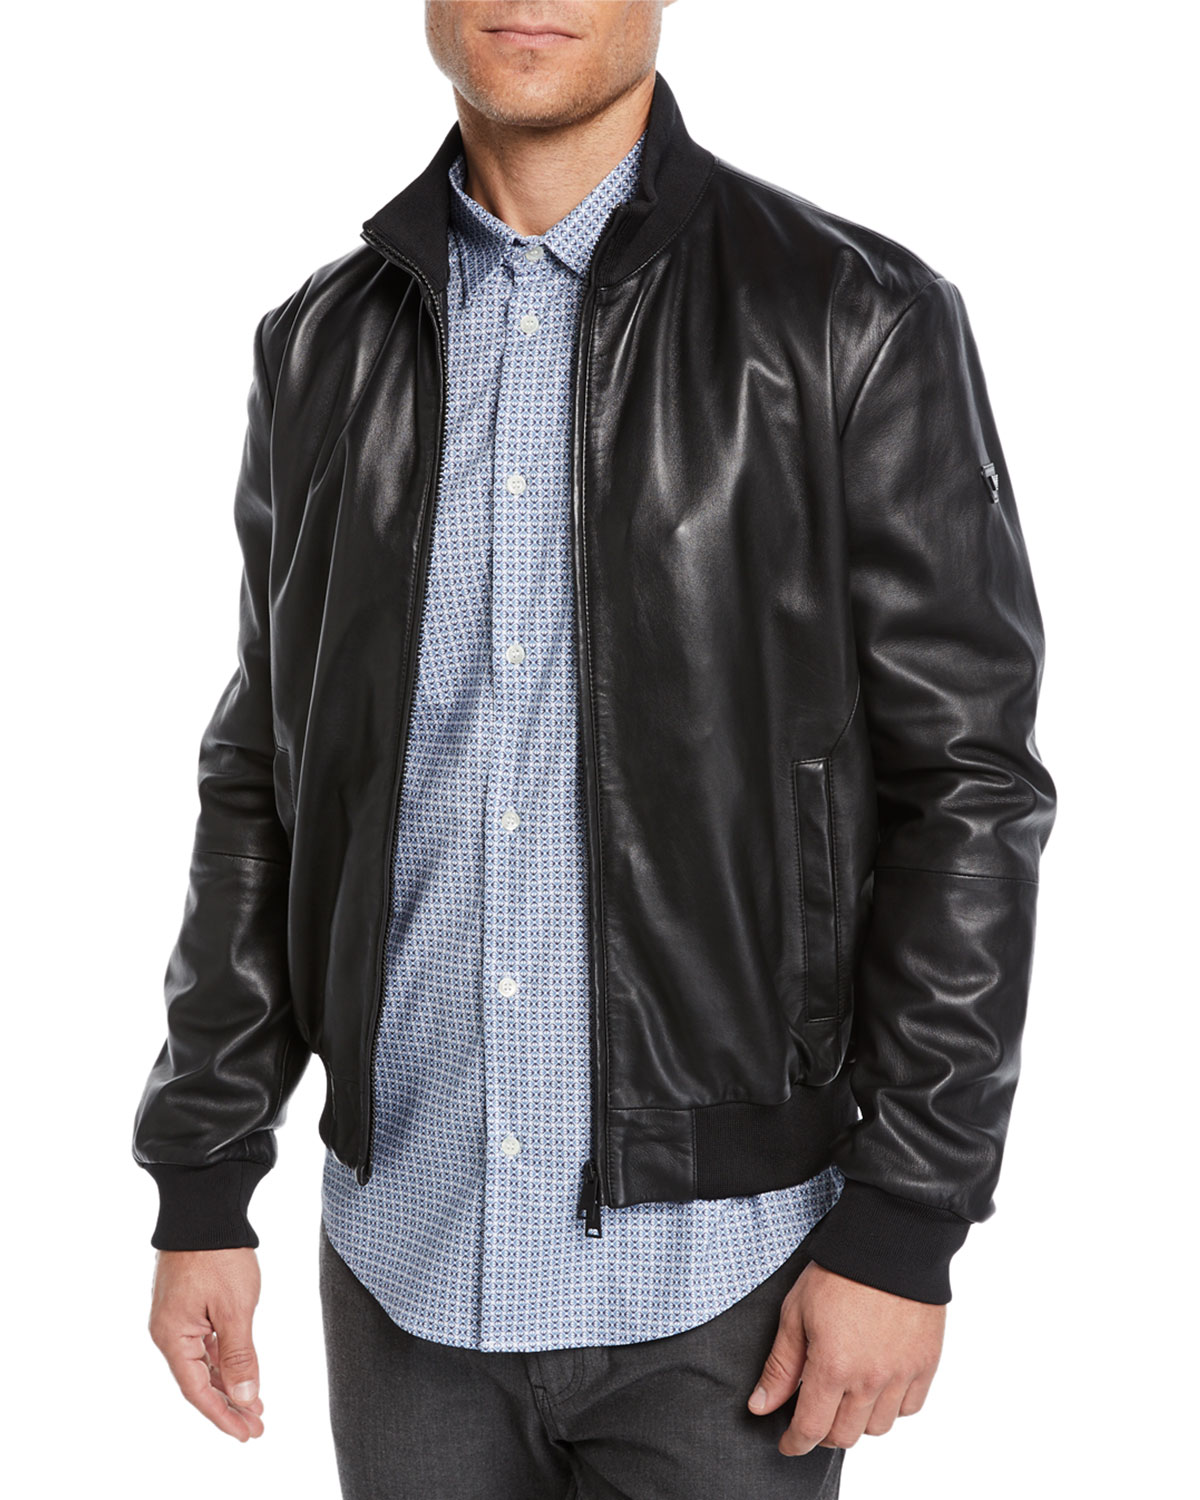 giorgio armani men's leather jacket